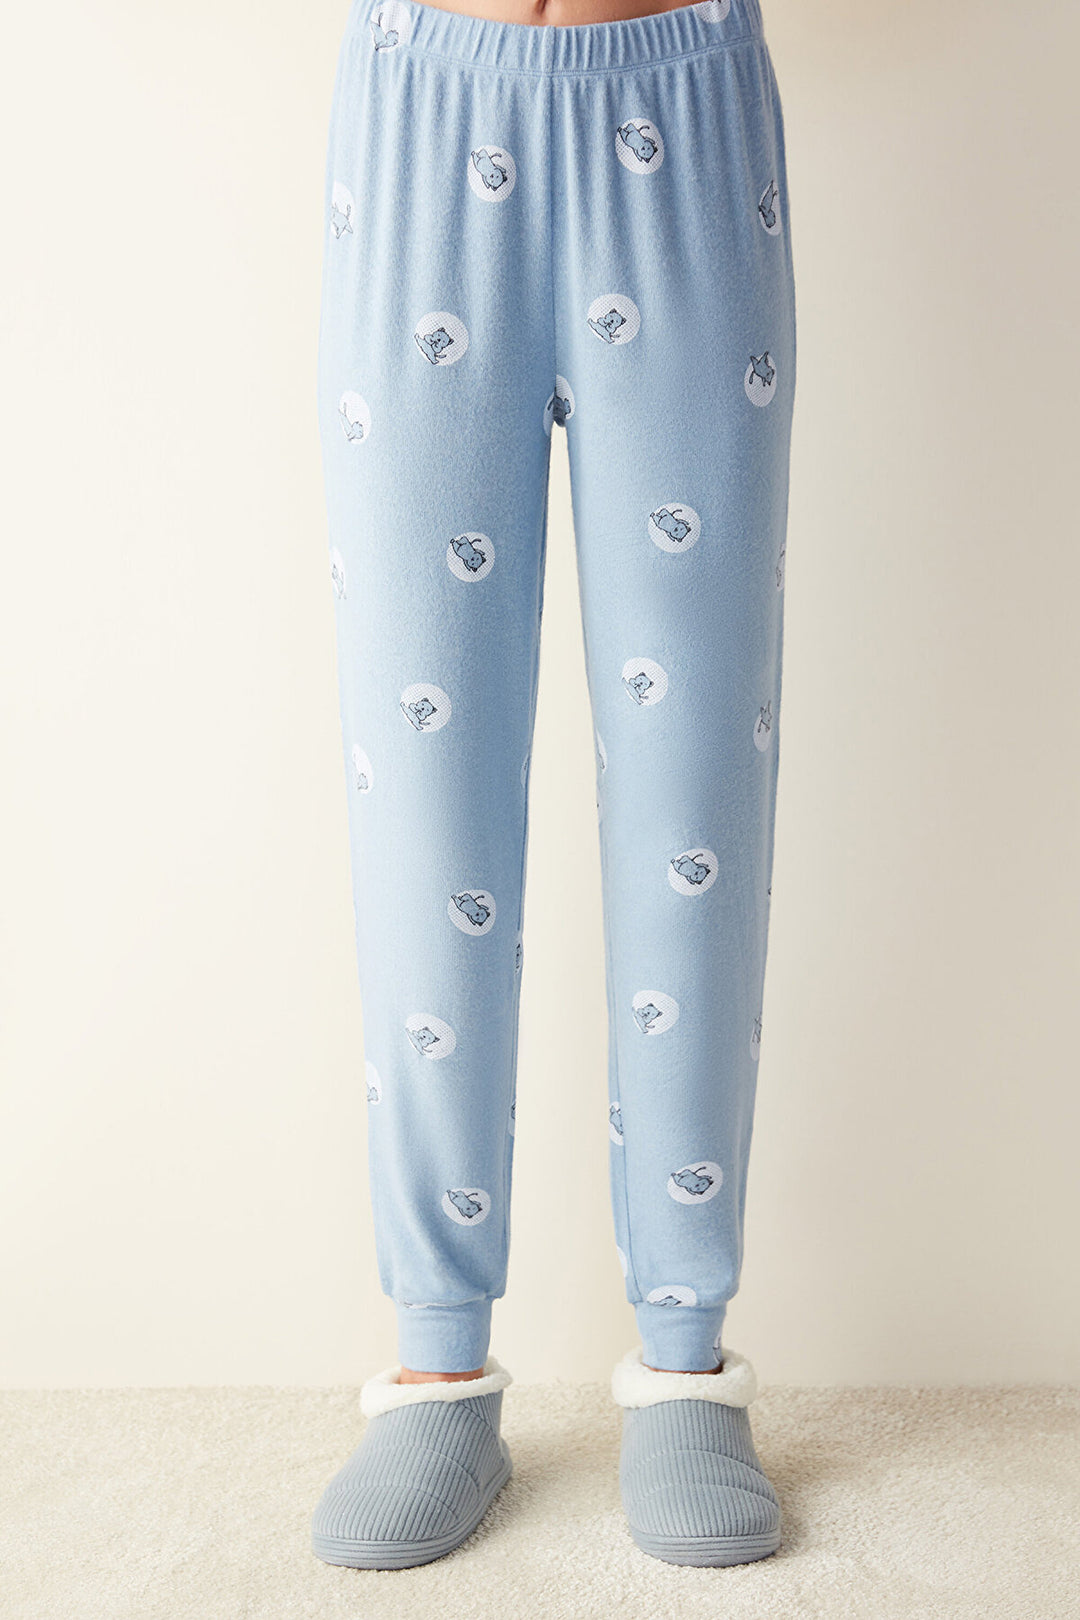 Moon Yoga Printed Blue Trousers Pajama Bottoms